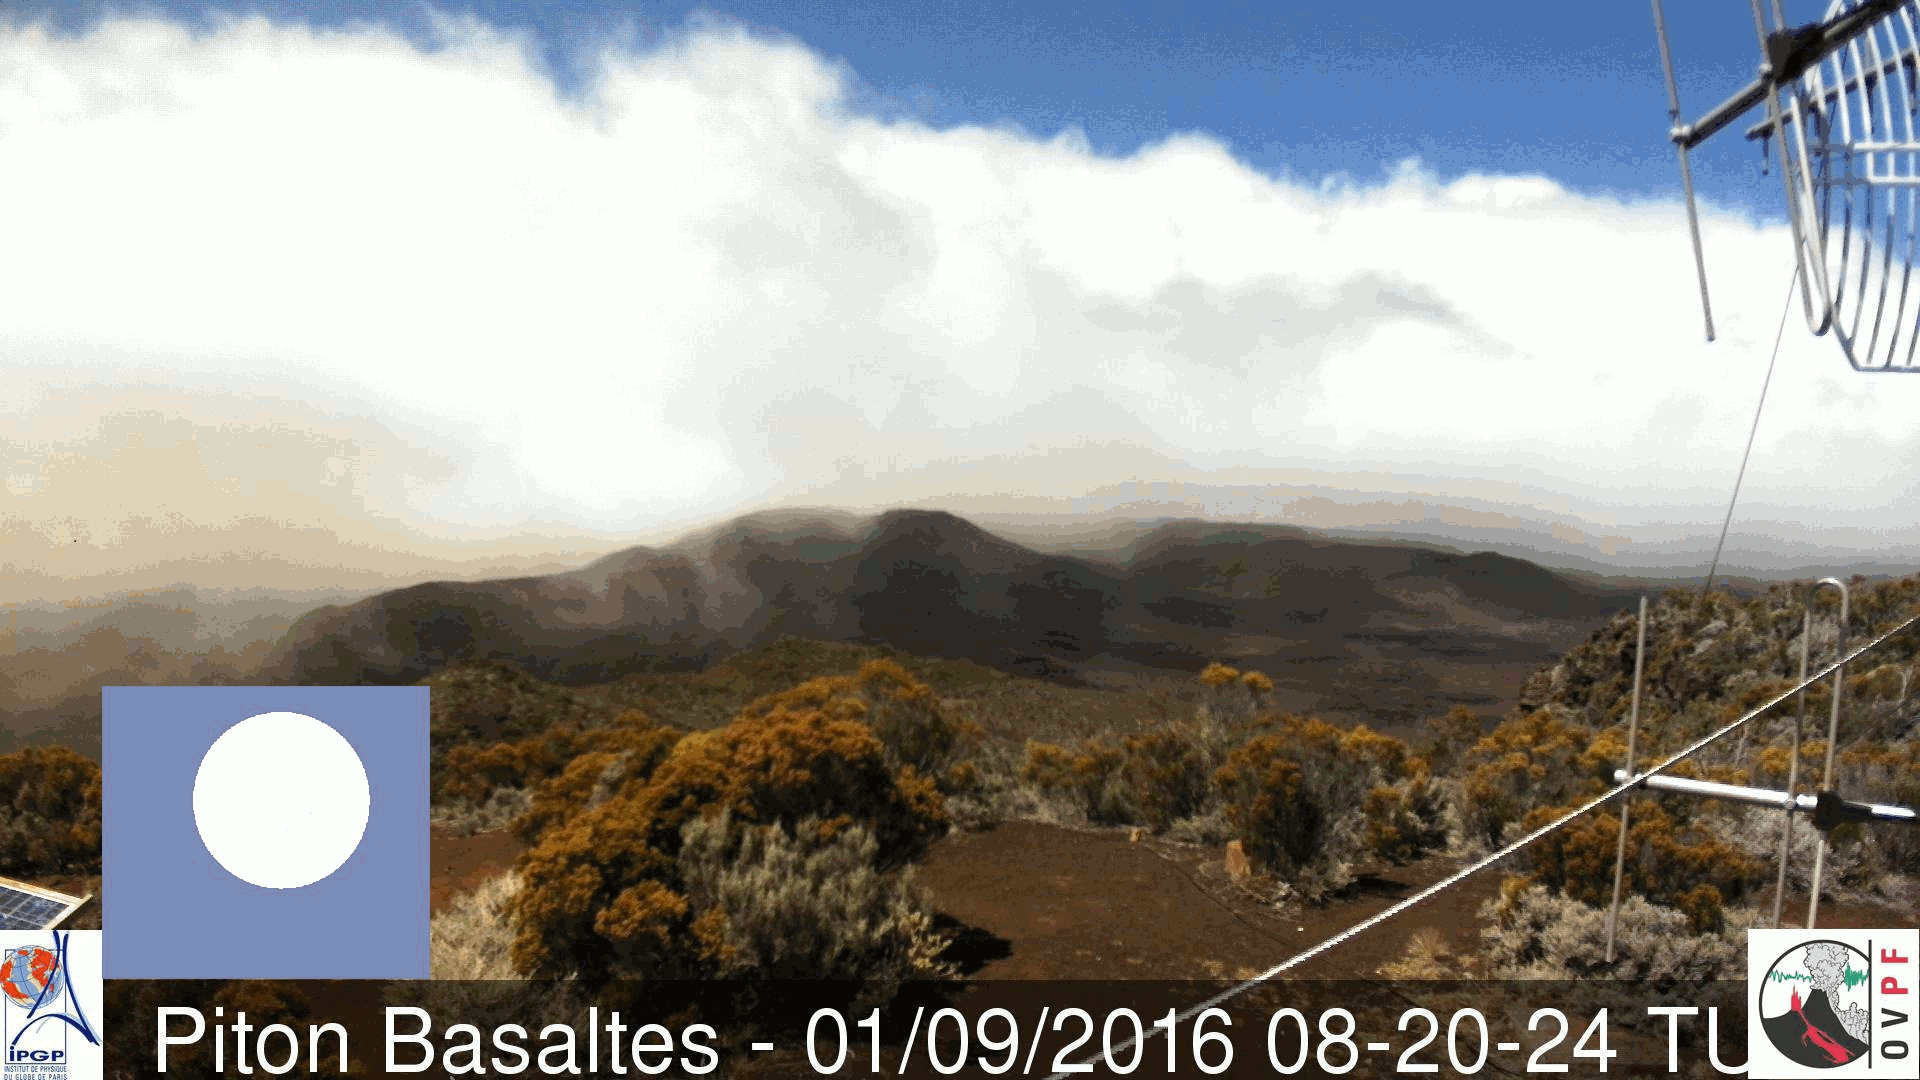 Annular solar eclipse 2016 Piton Basalte Reunion webcam